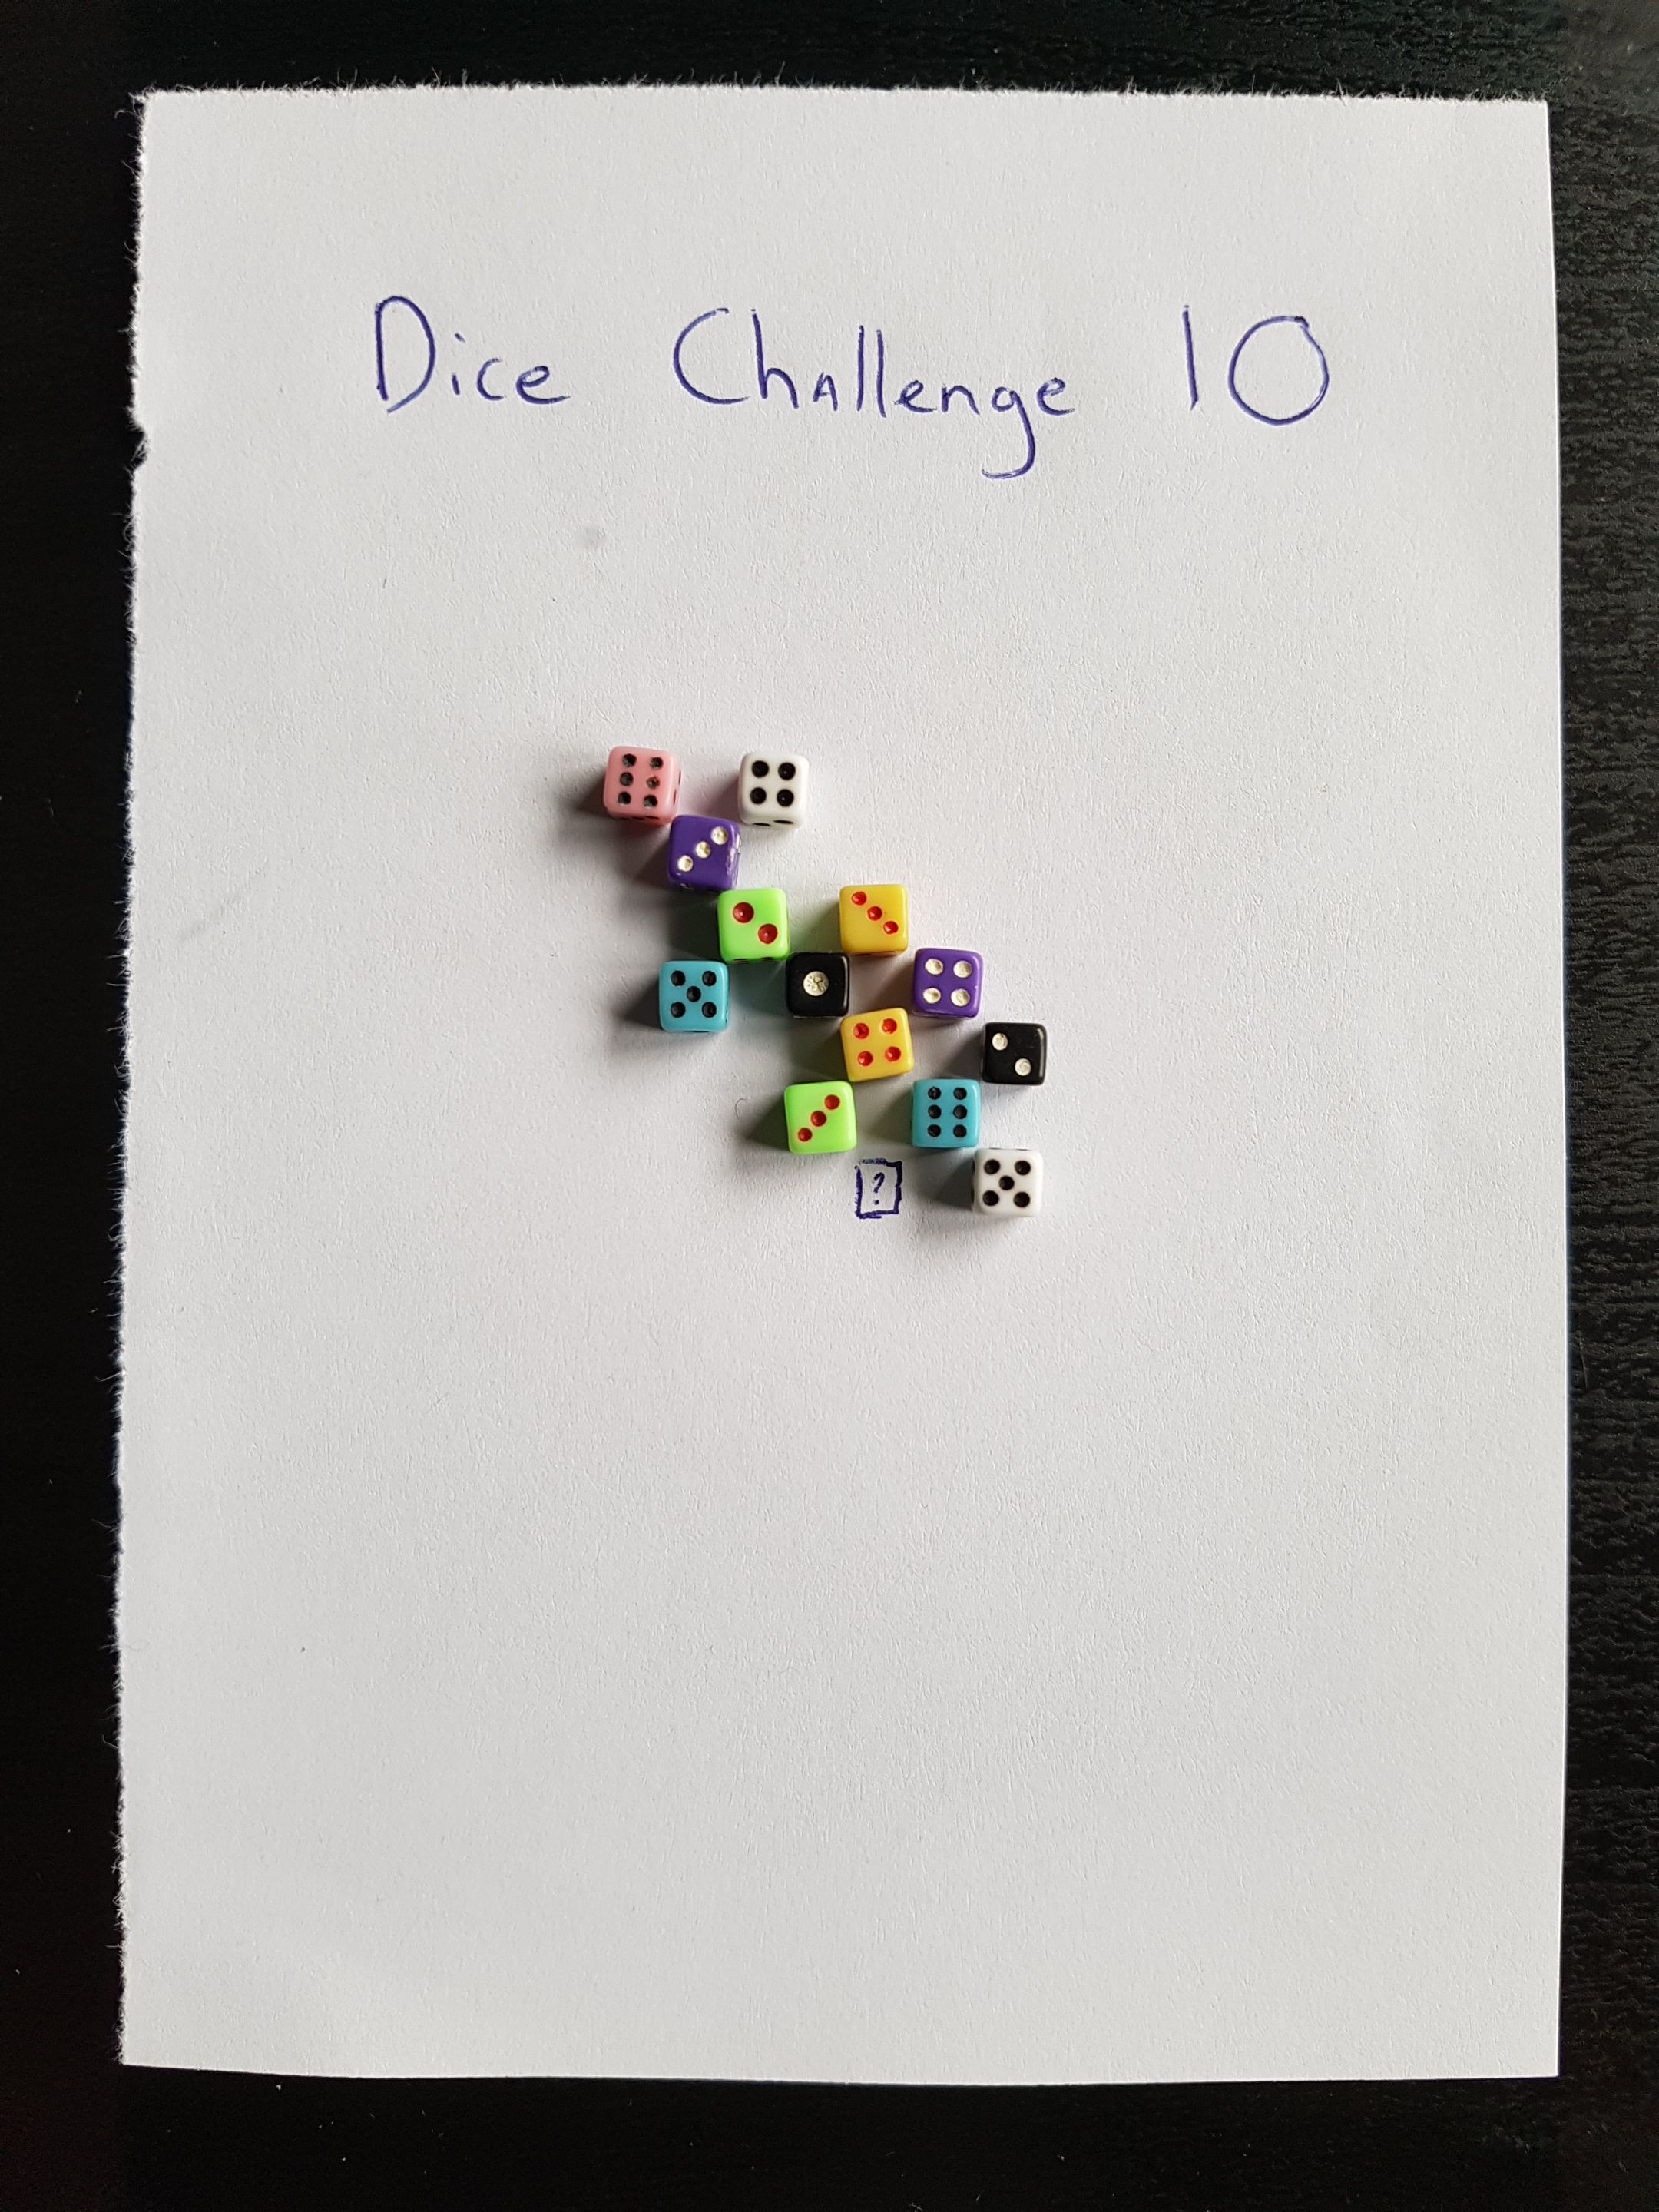 Dice Challenge 10.jpg